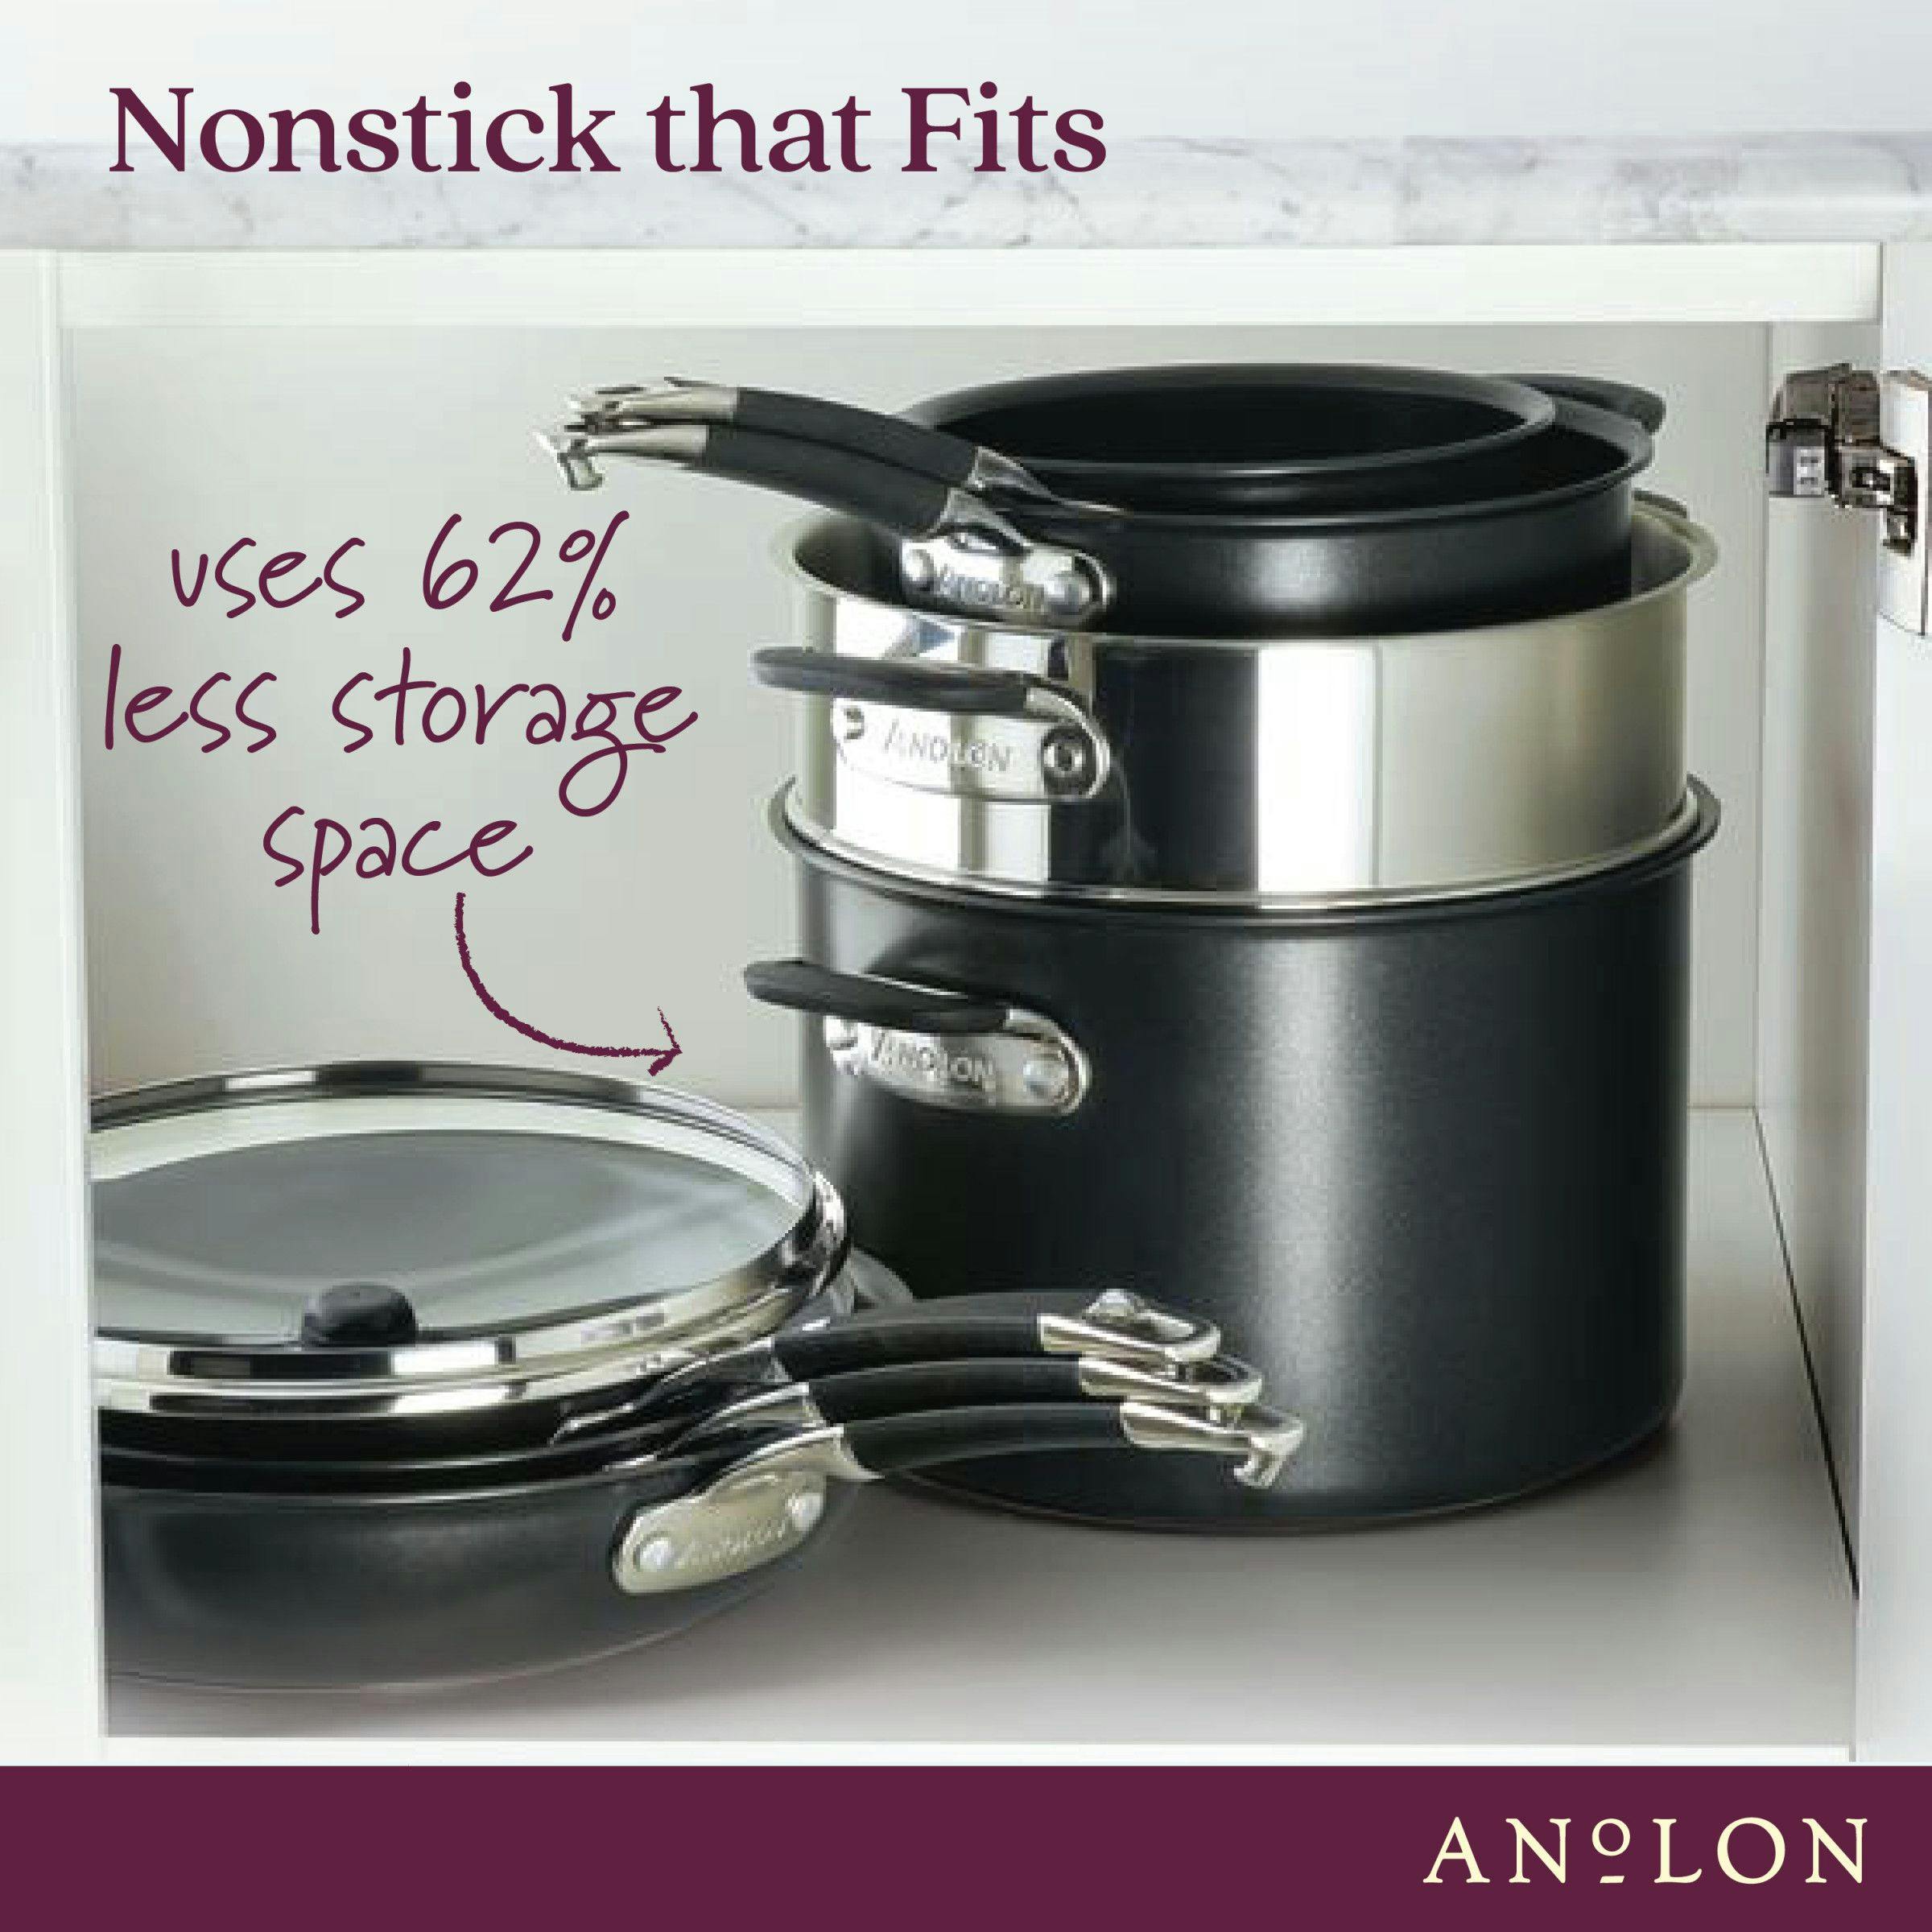 Anolon SmartStack Hard-Anodized Nonstick Cookware Induction Pots and Pans Set, 10-Piece, Black